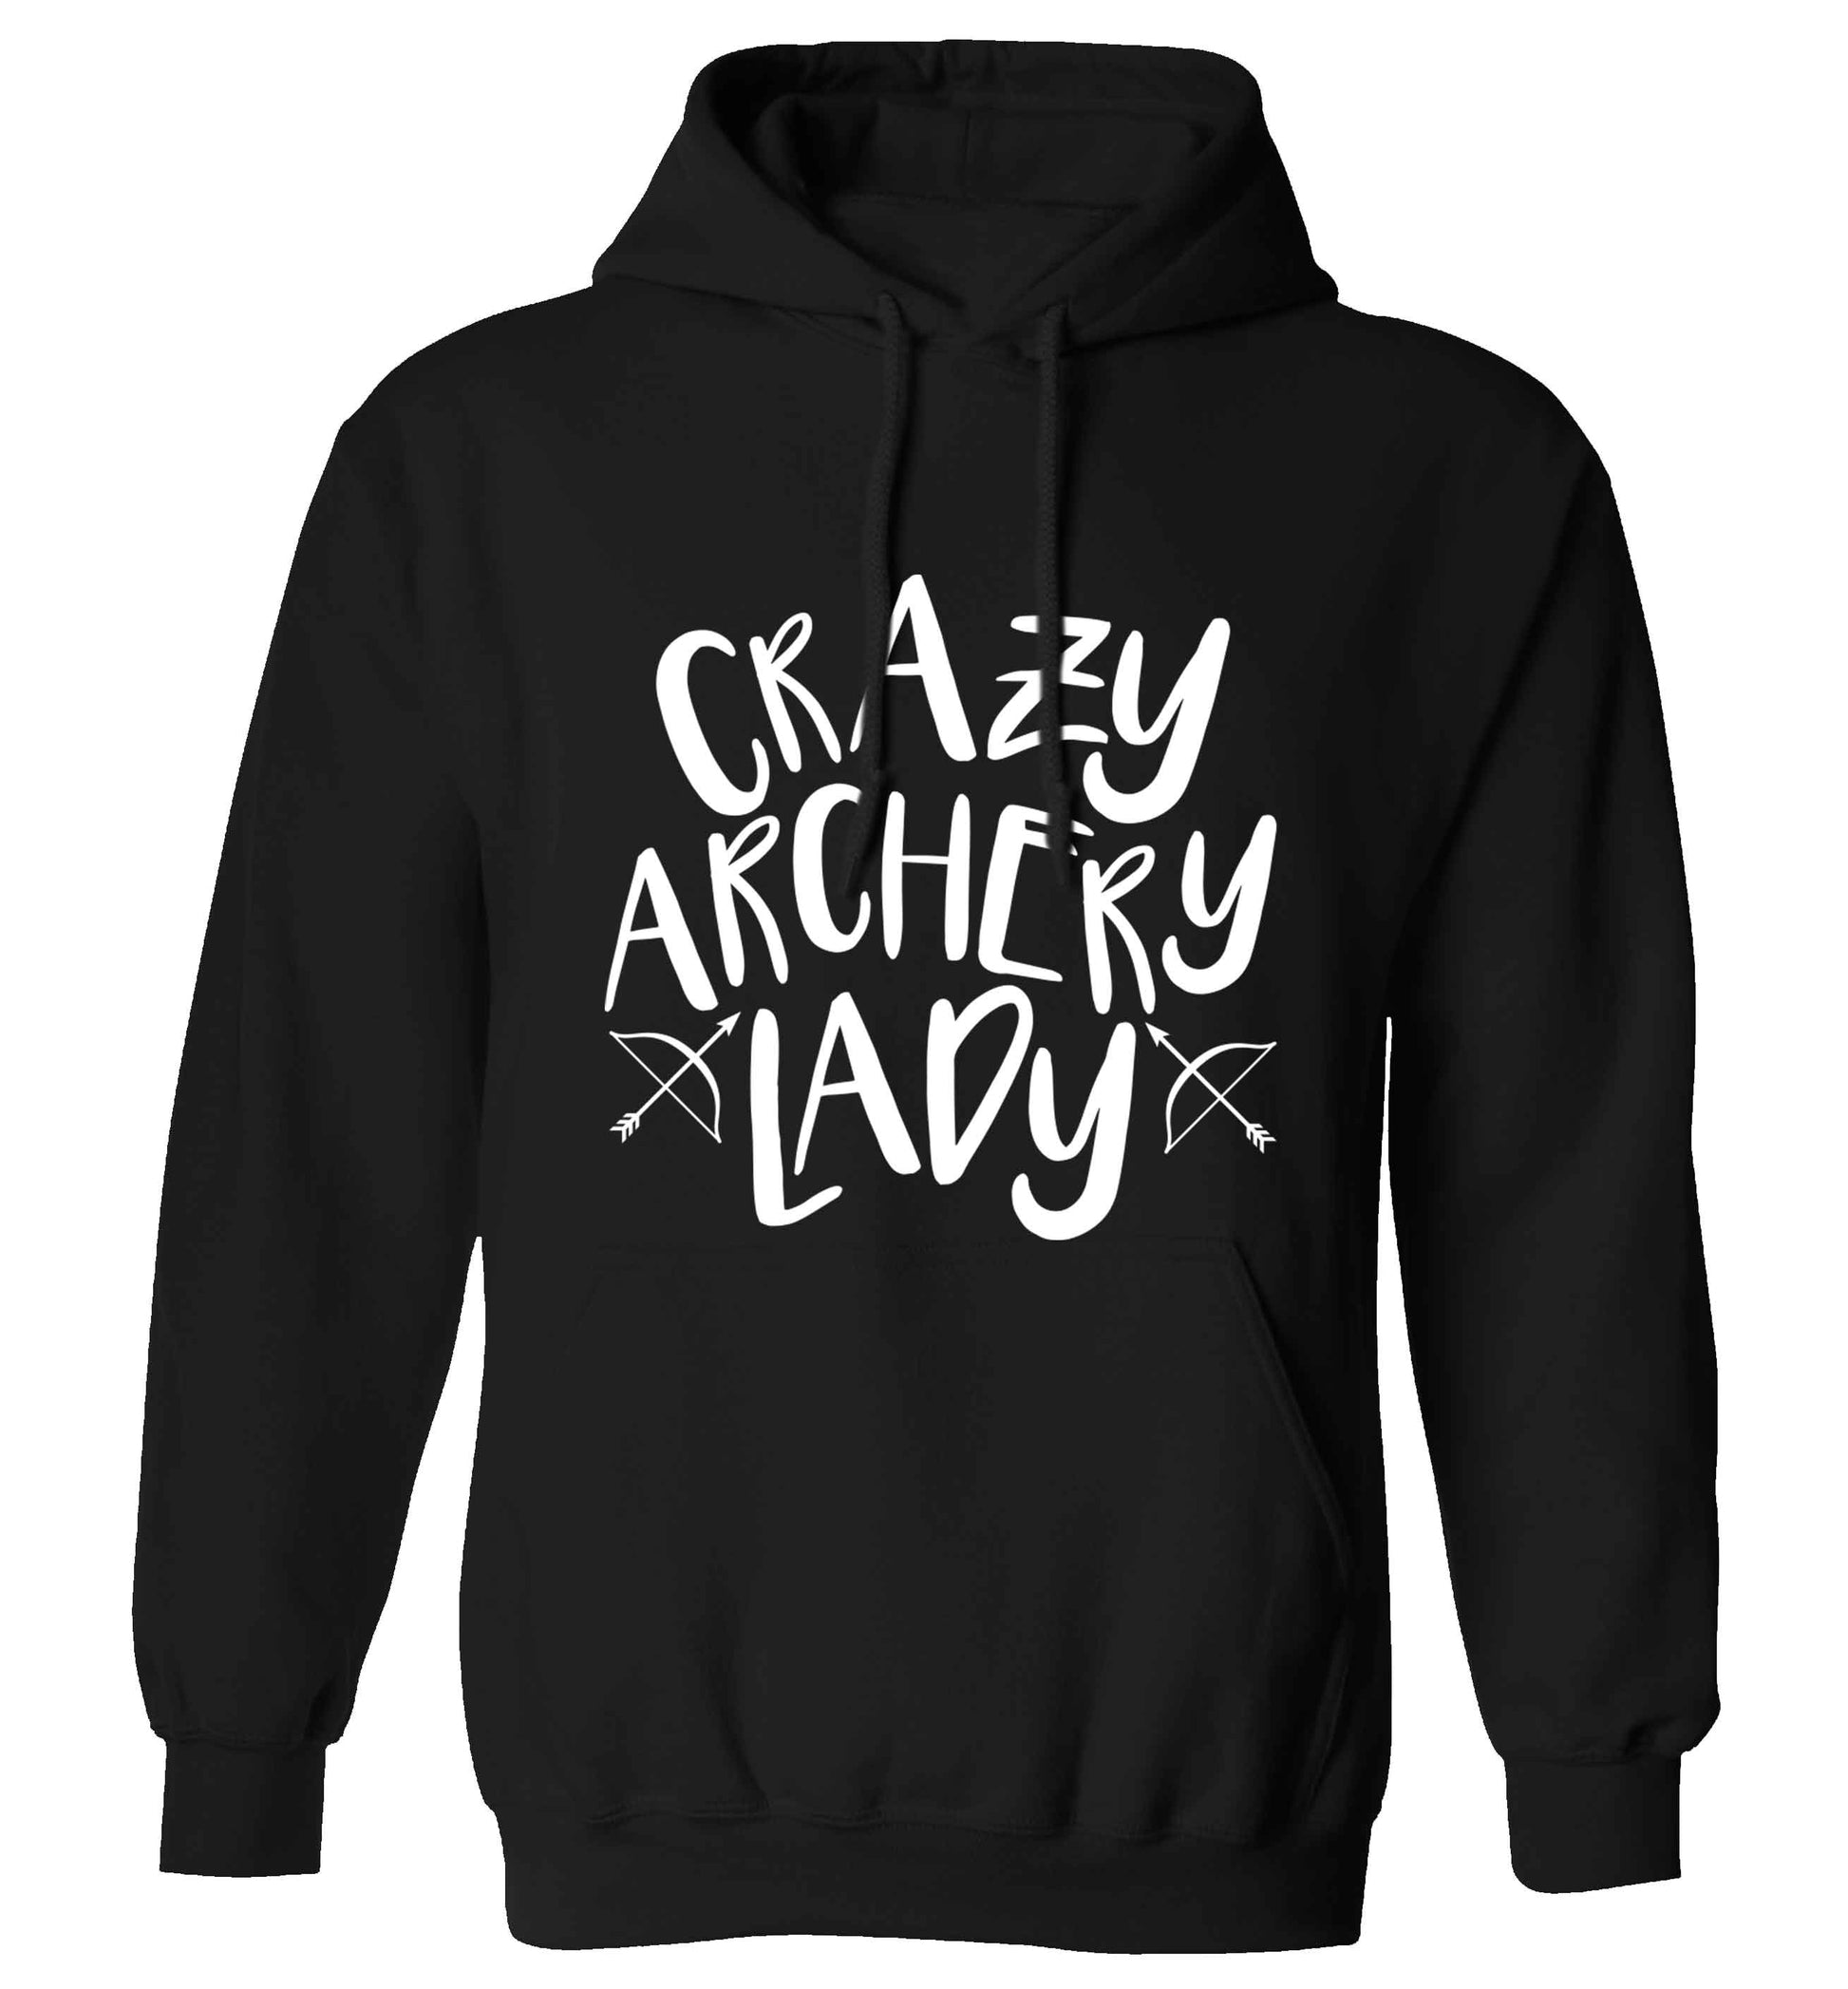 Crazy archery lady adults unisex black hoodie 2XL